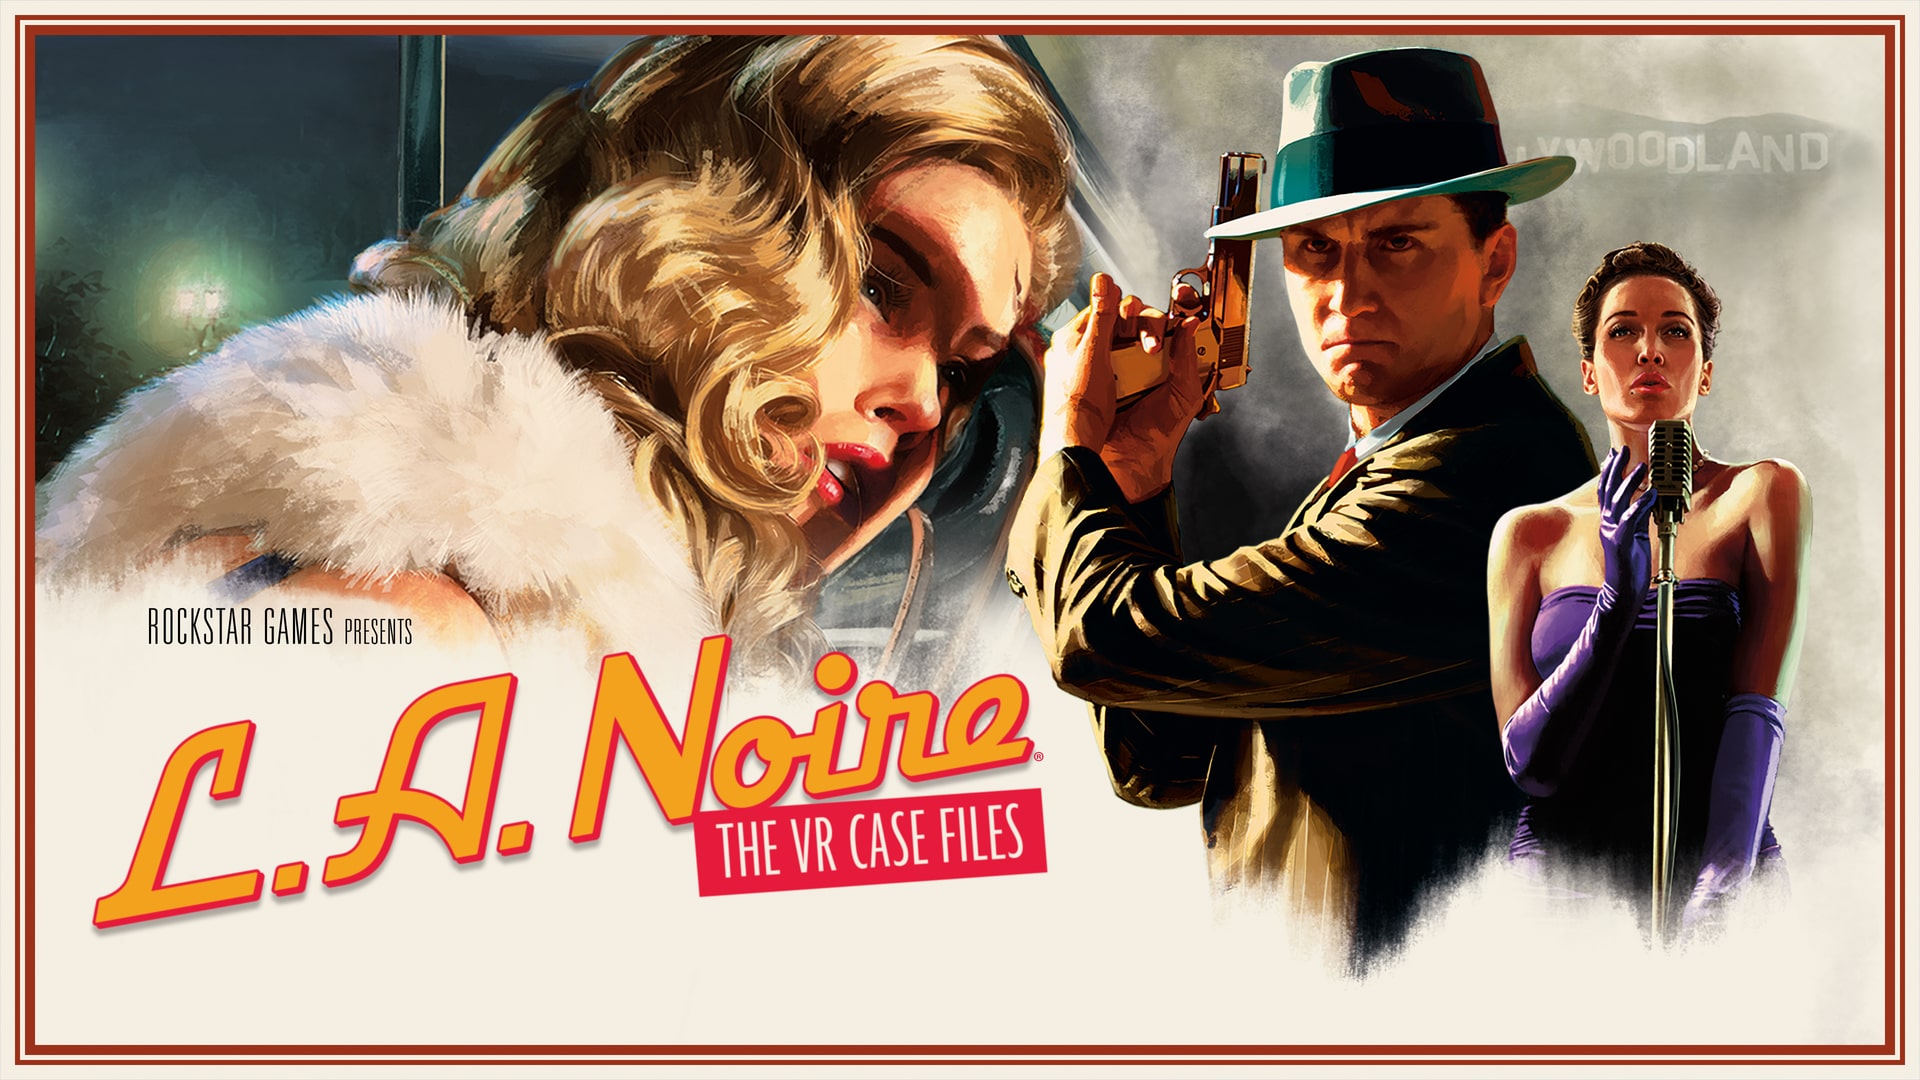 L.A. Noire: The VR Case Files (英文版)